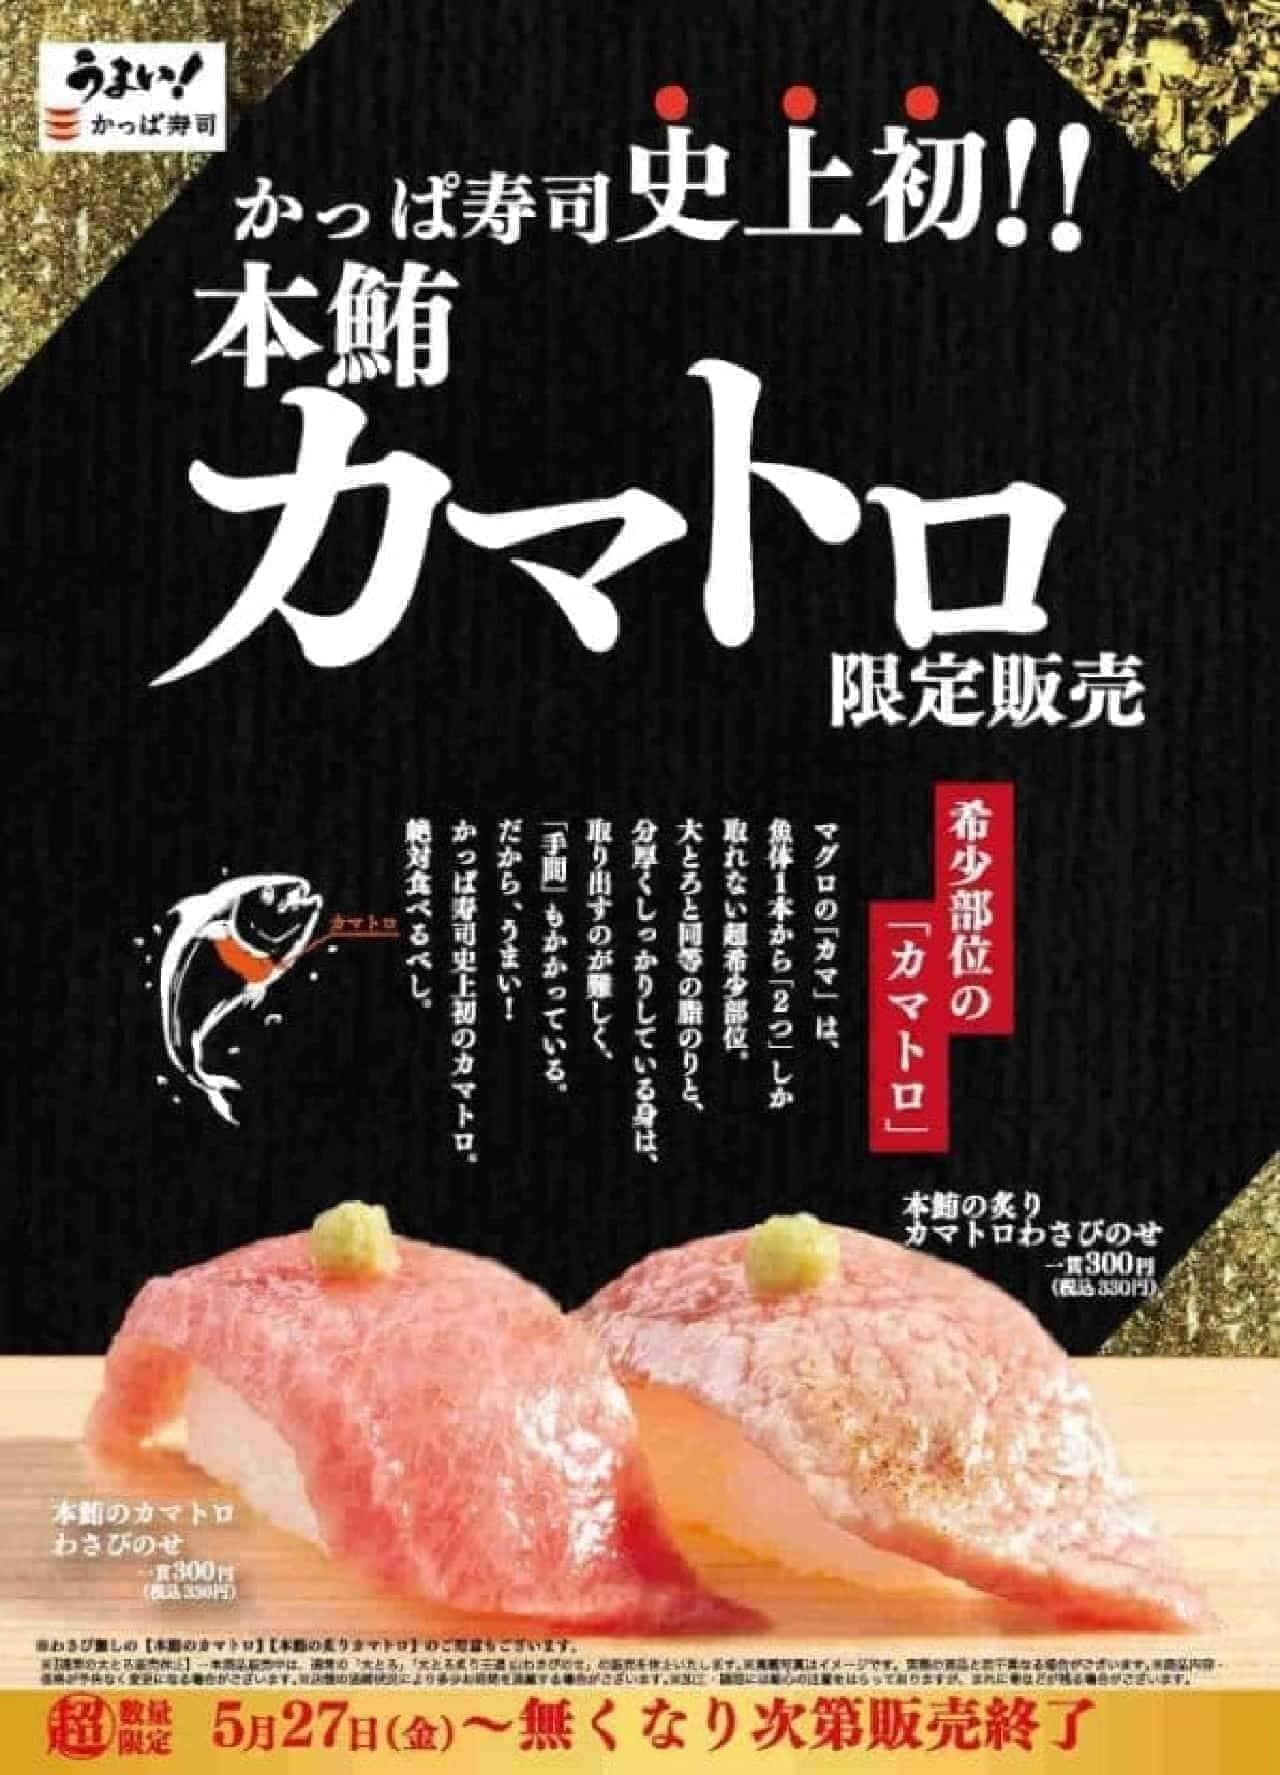 Kappa Sushi "Honmaguro no Kamatoro" (Tuna Kamatoro)